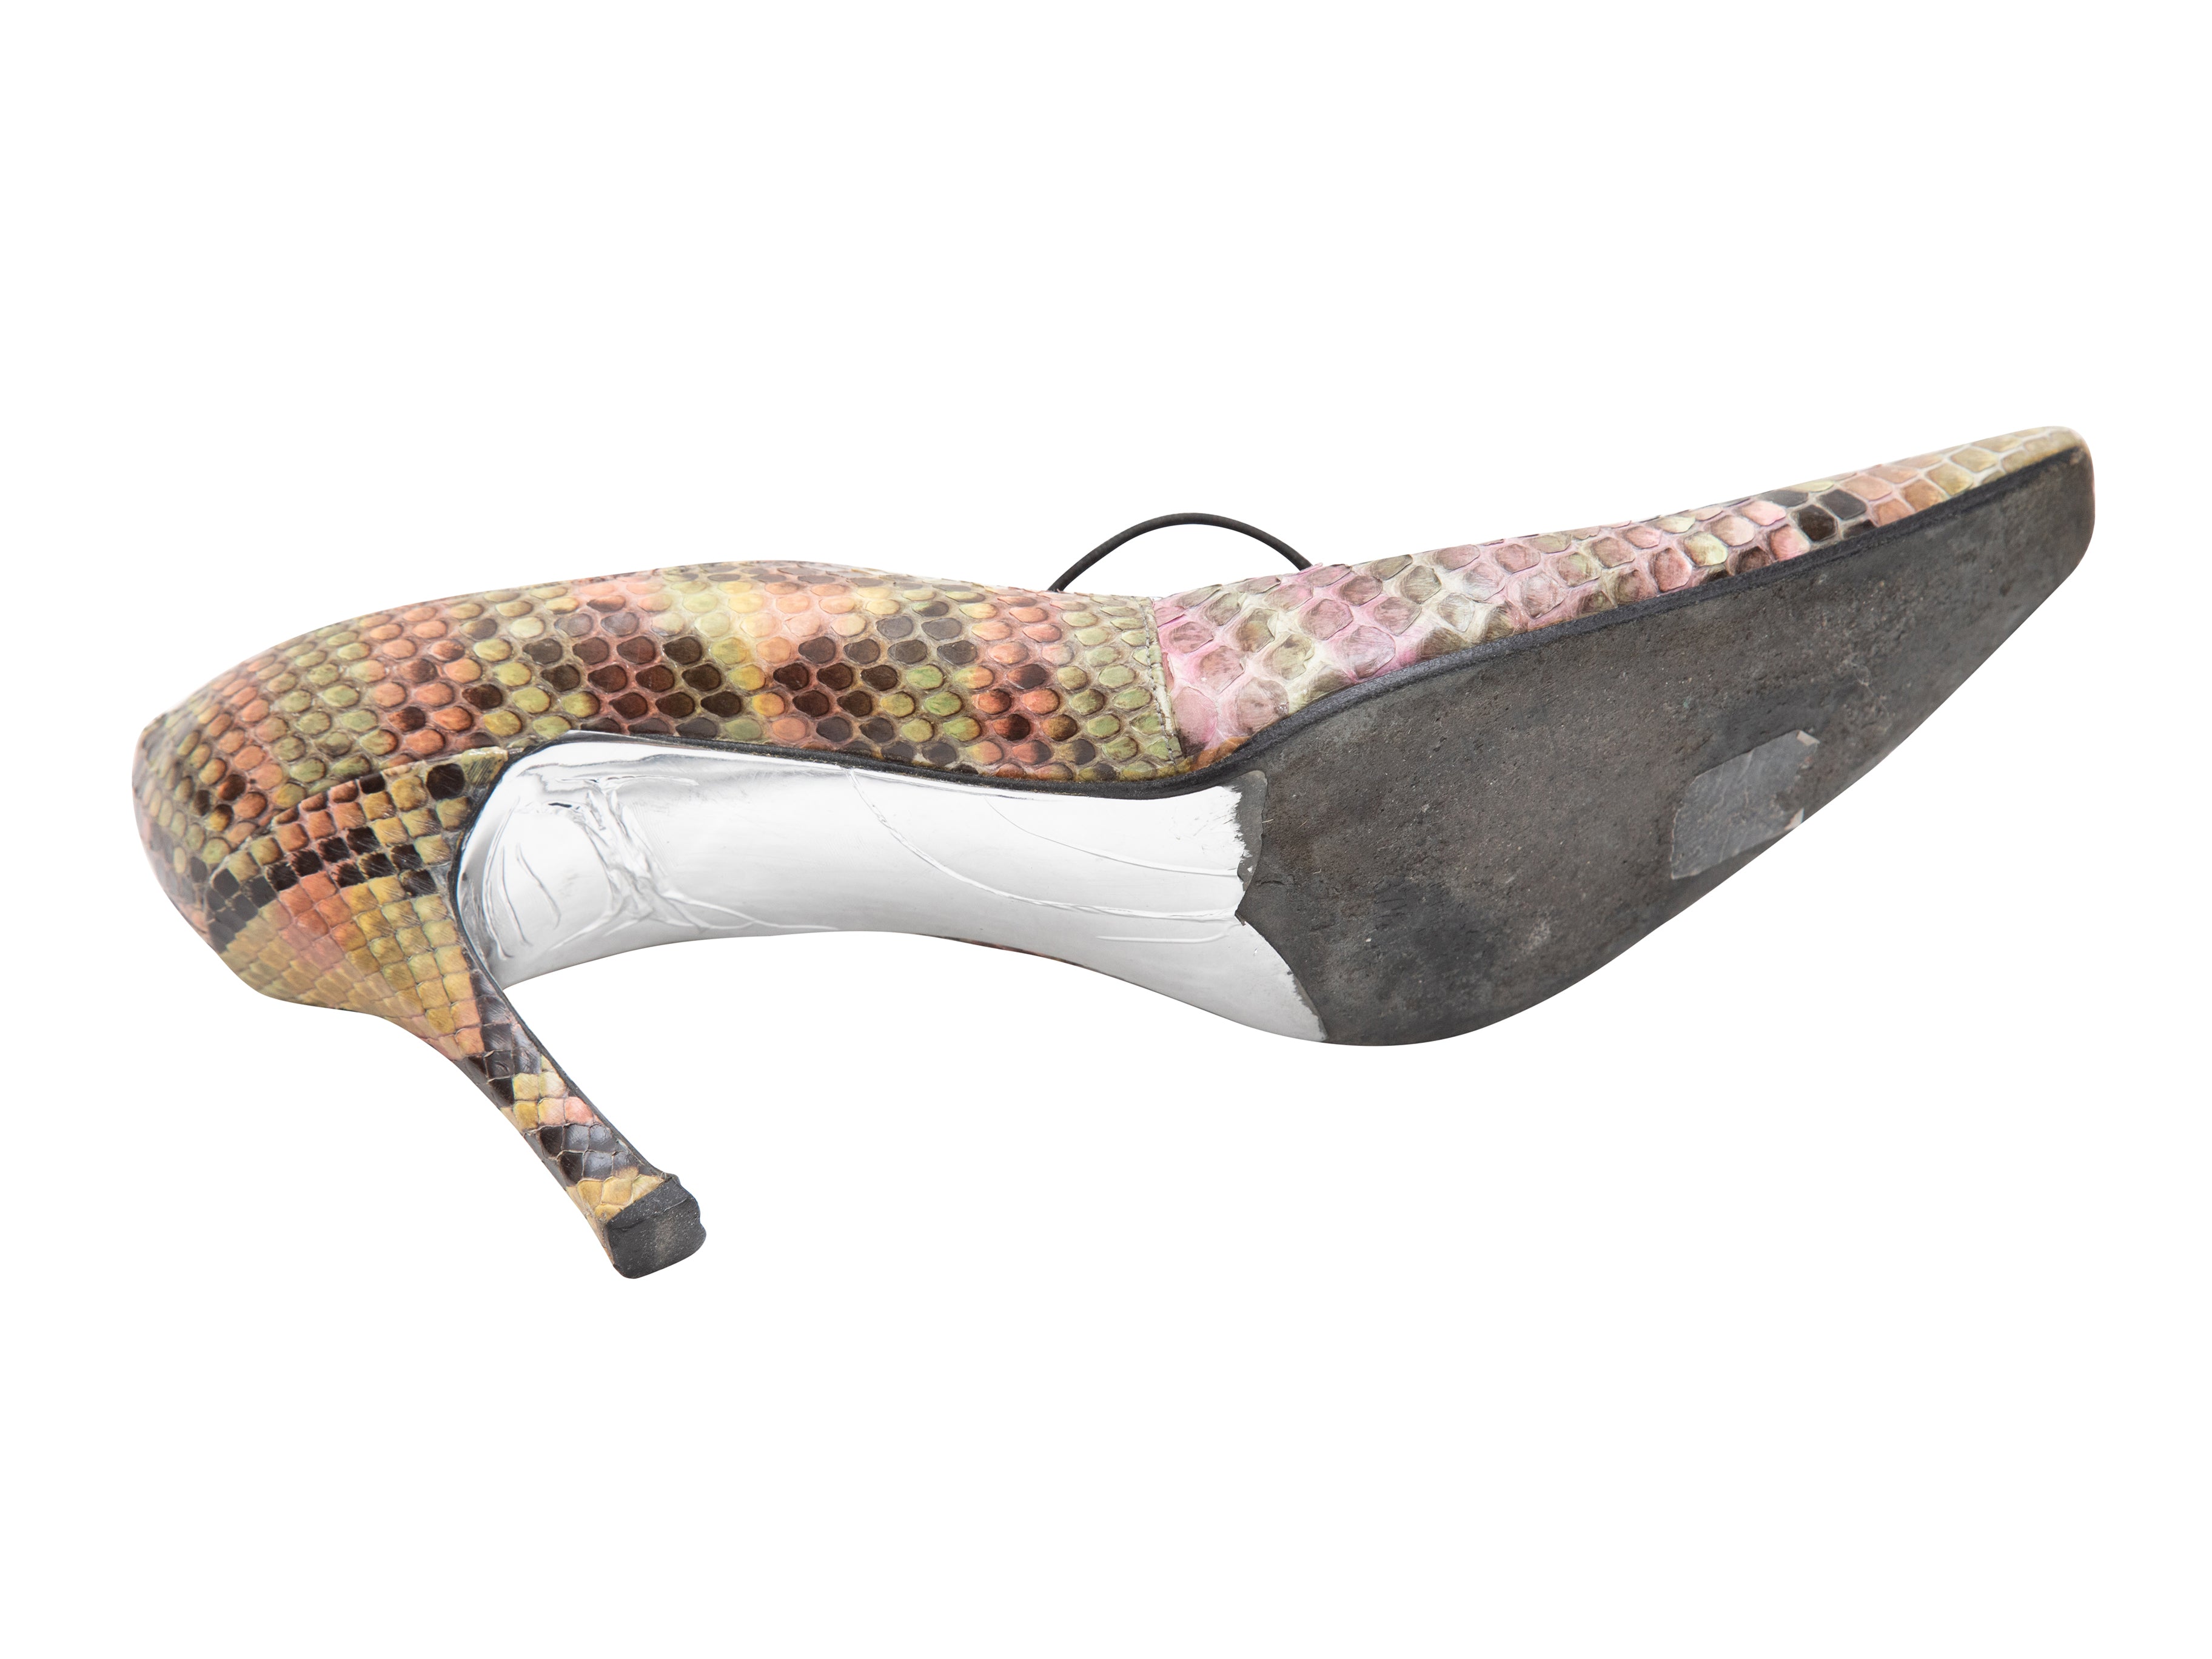 Versace Multicolor Snake Print Heels for Women Online India at Darveys.com